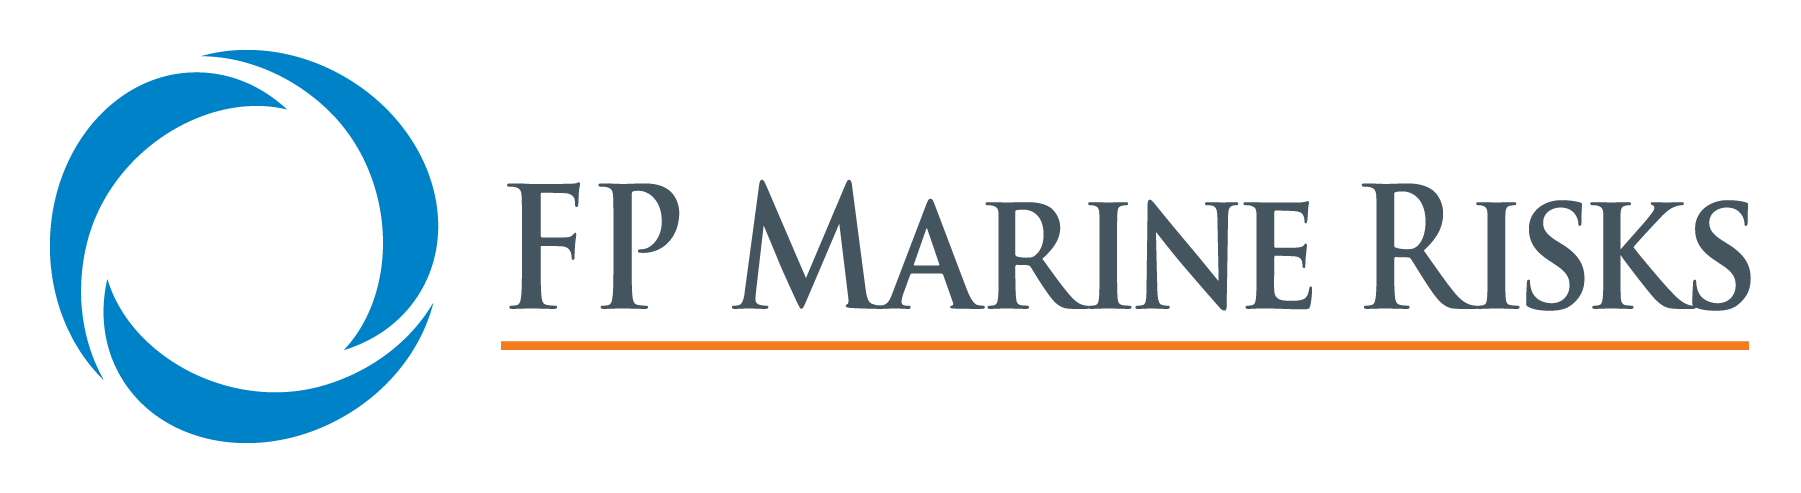 FP Marine Risks Ltd